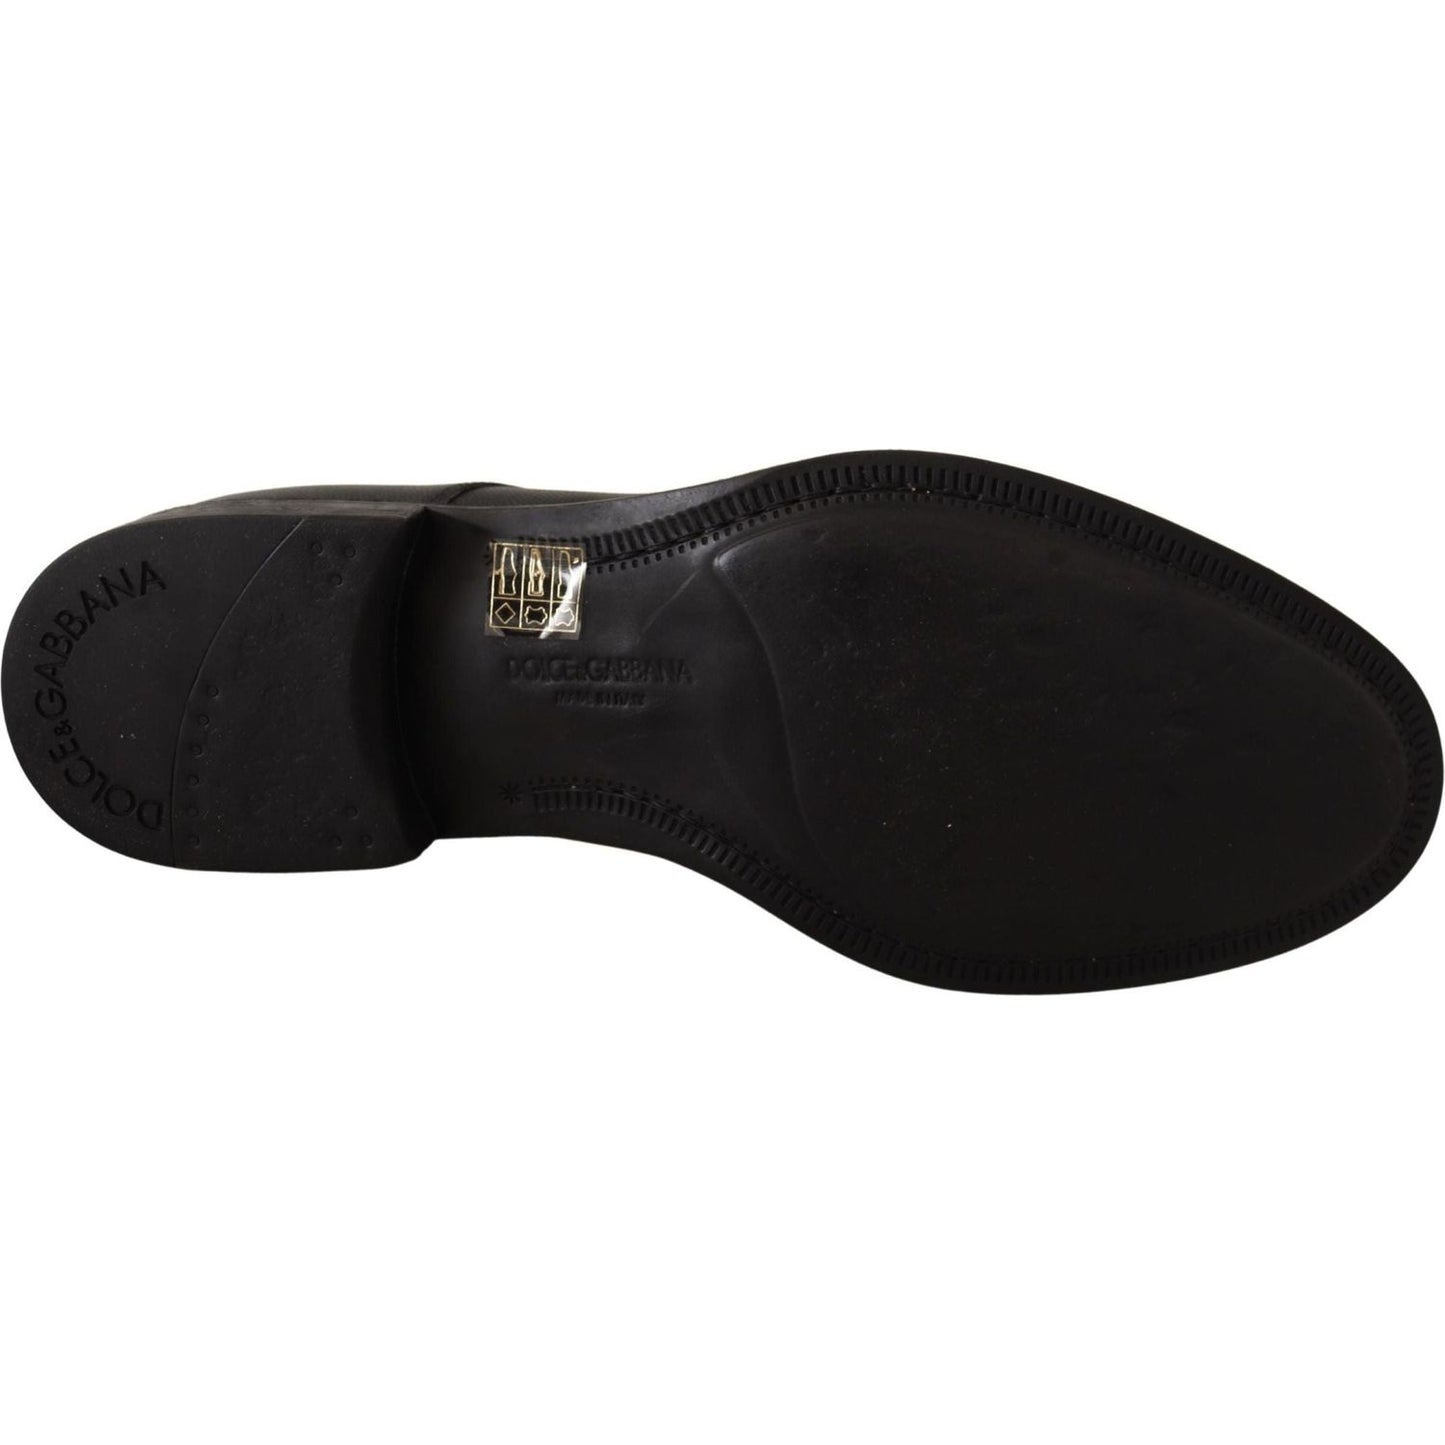 Dolce & Gabbana Elegant Black Leather Derby Shoes black-leather-lace-up-mens-formal-derby-shoes-1 IMG_4973-scaled-27d59919-628.jpg